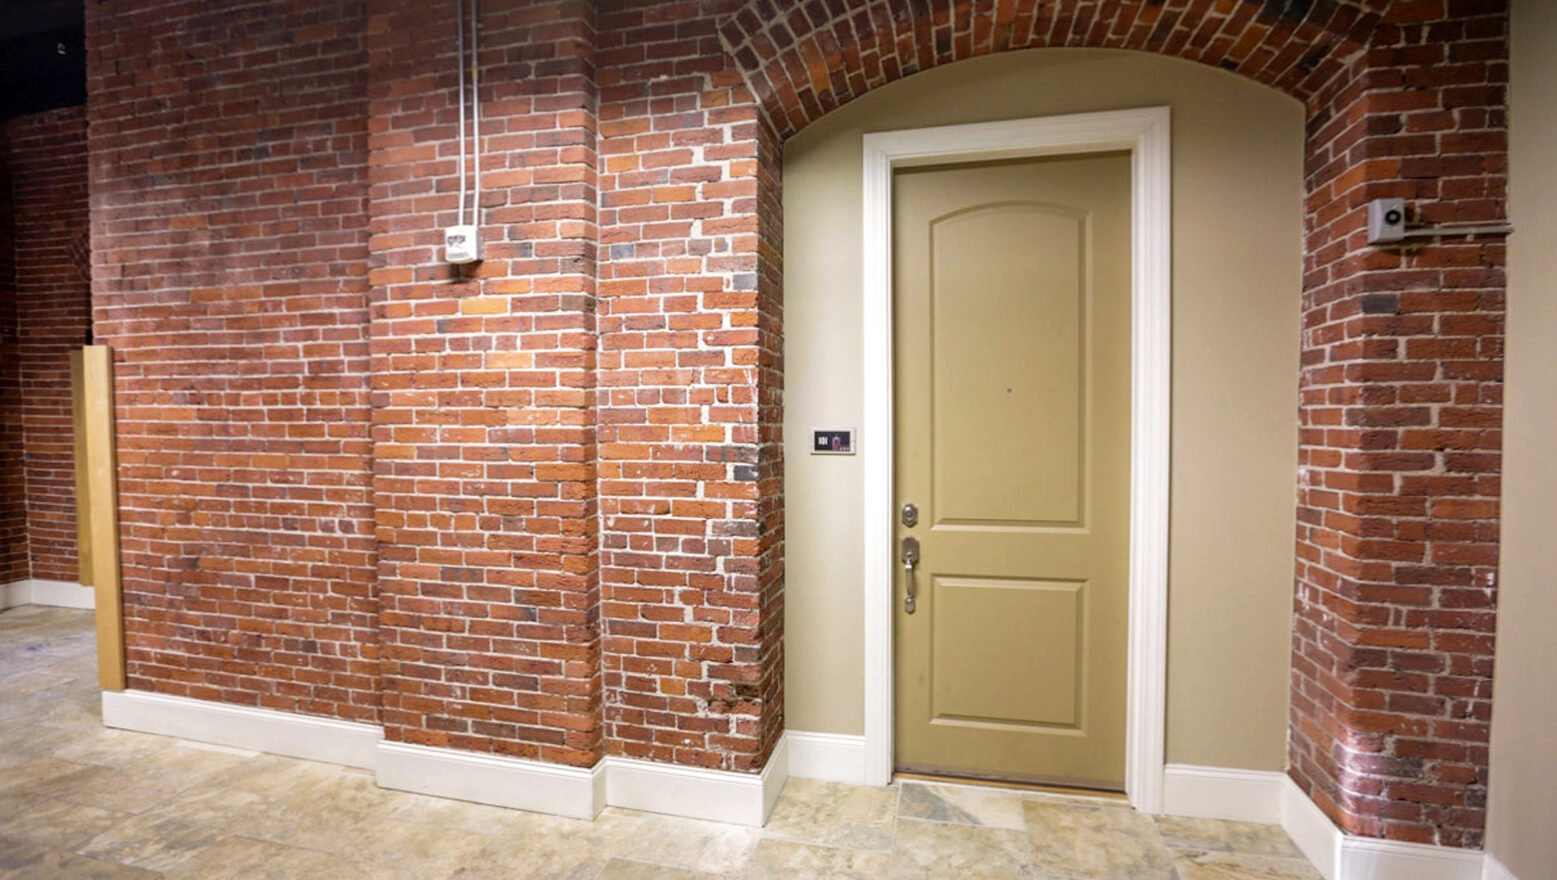 Interior Brick Wall with Door